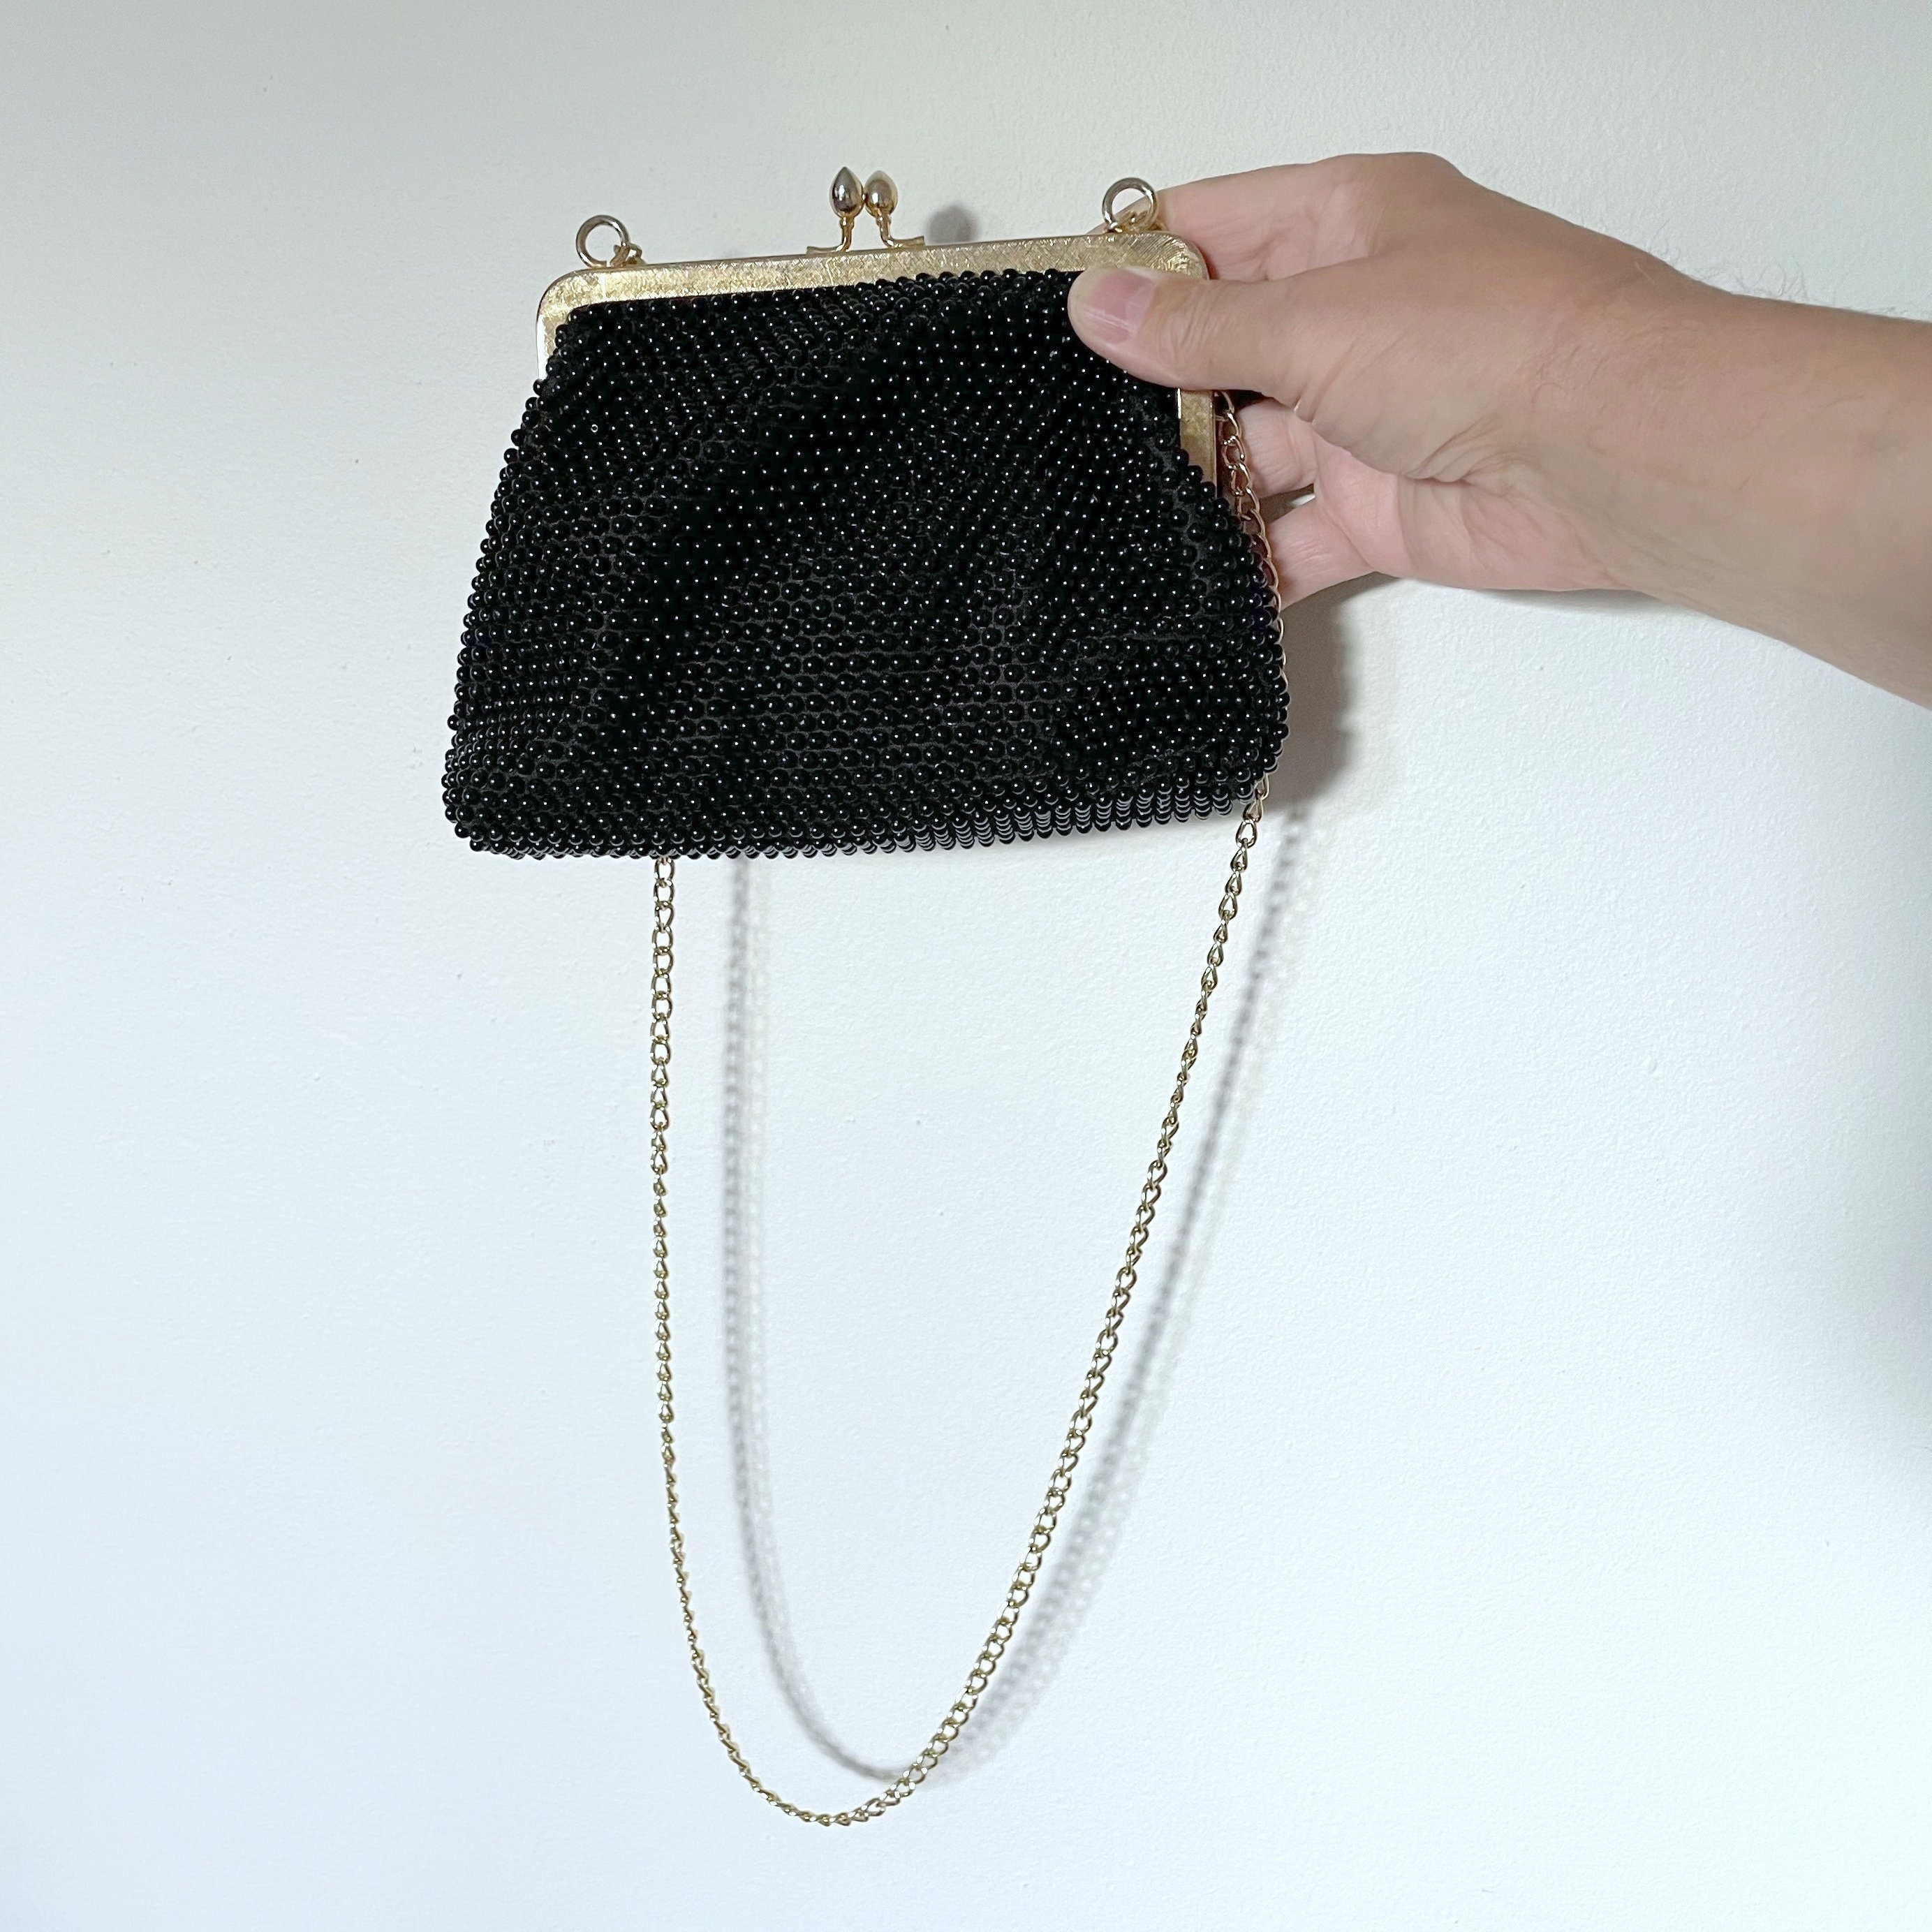 It's in The Bag: The Handbag Collectors' Market